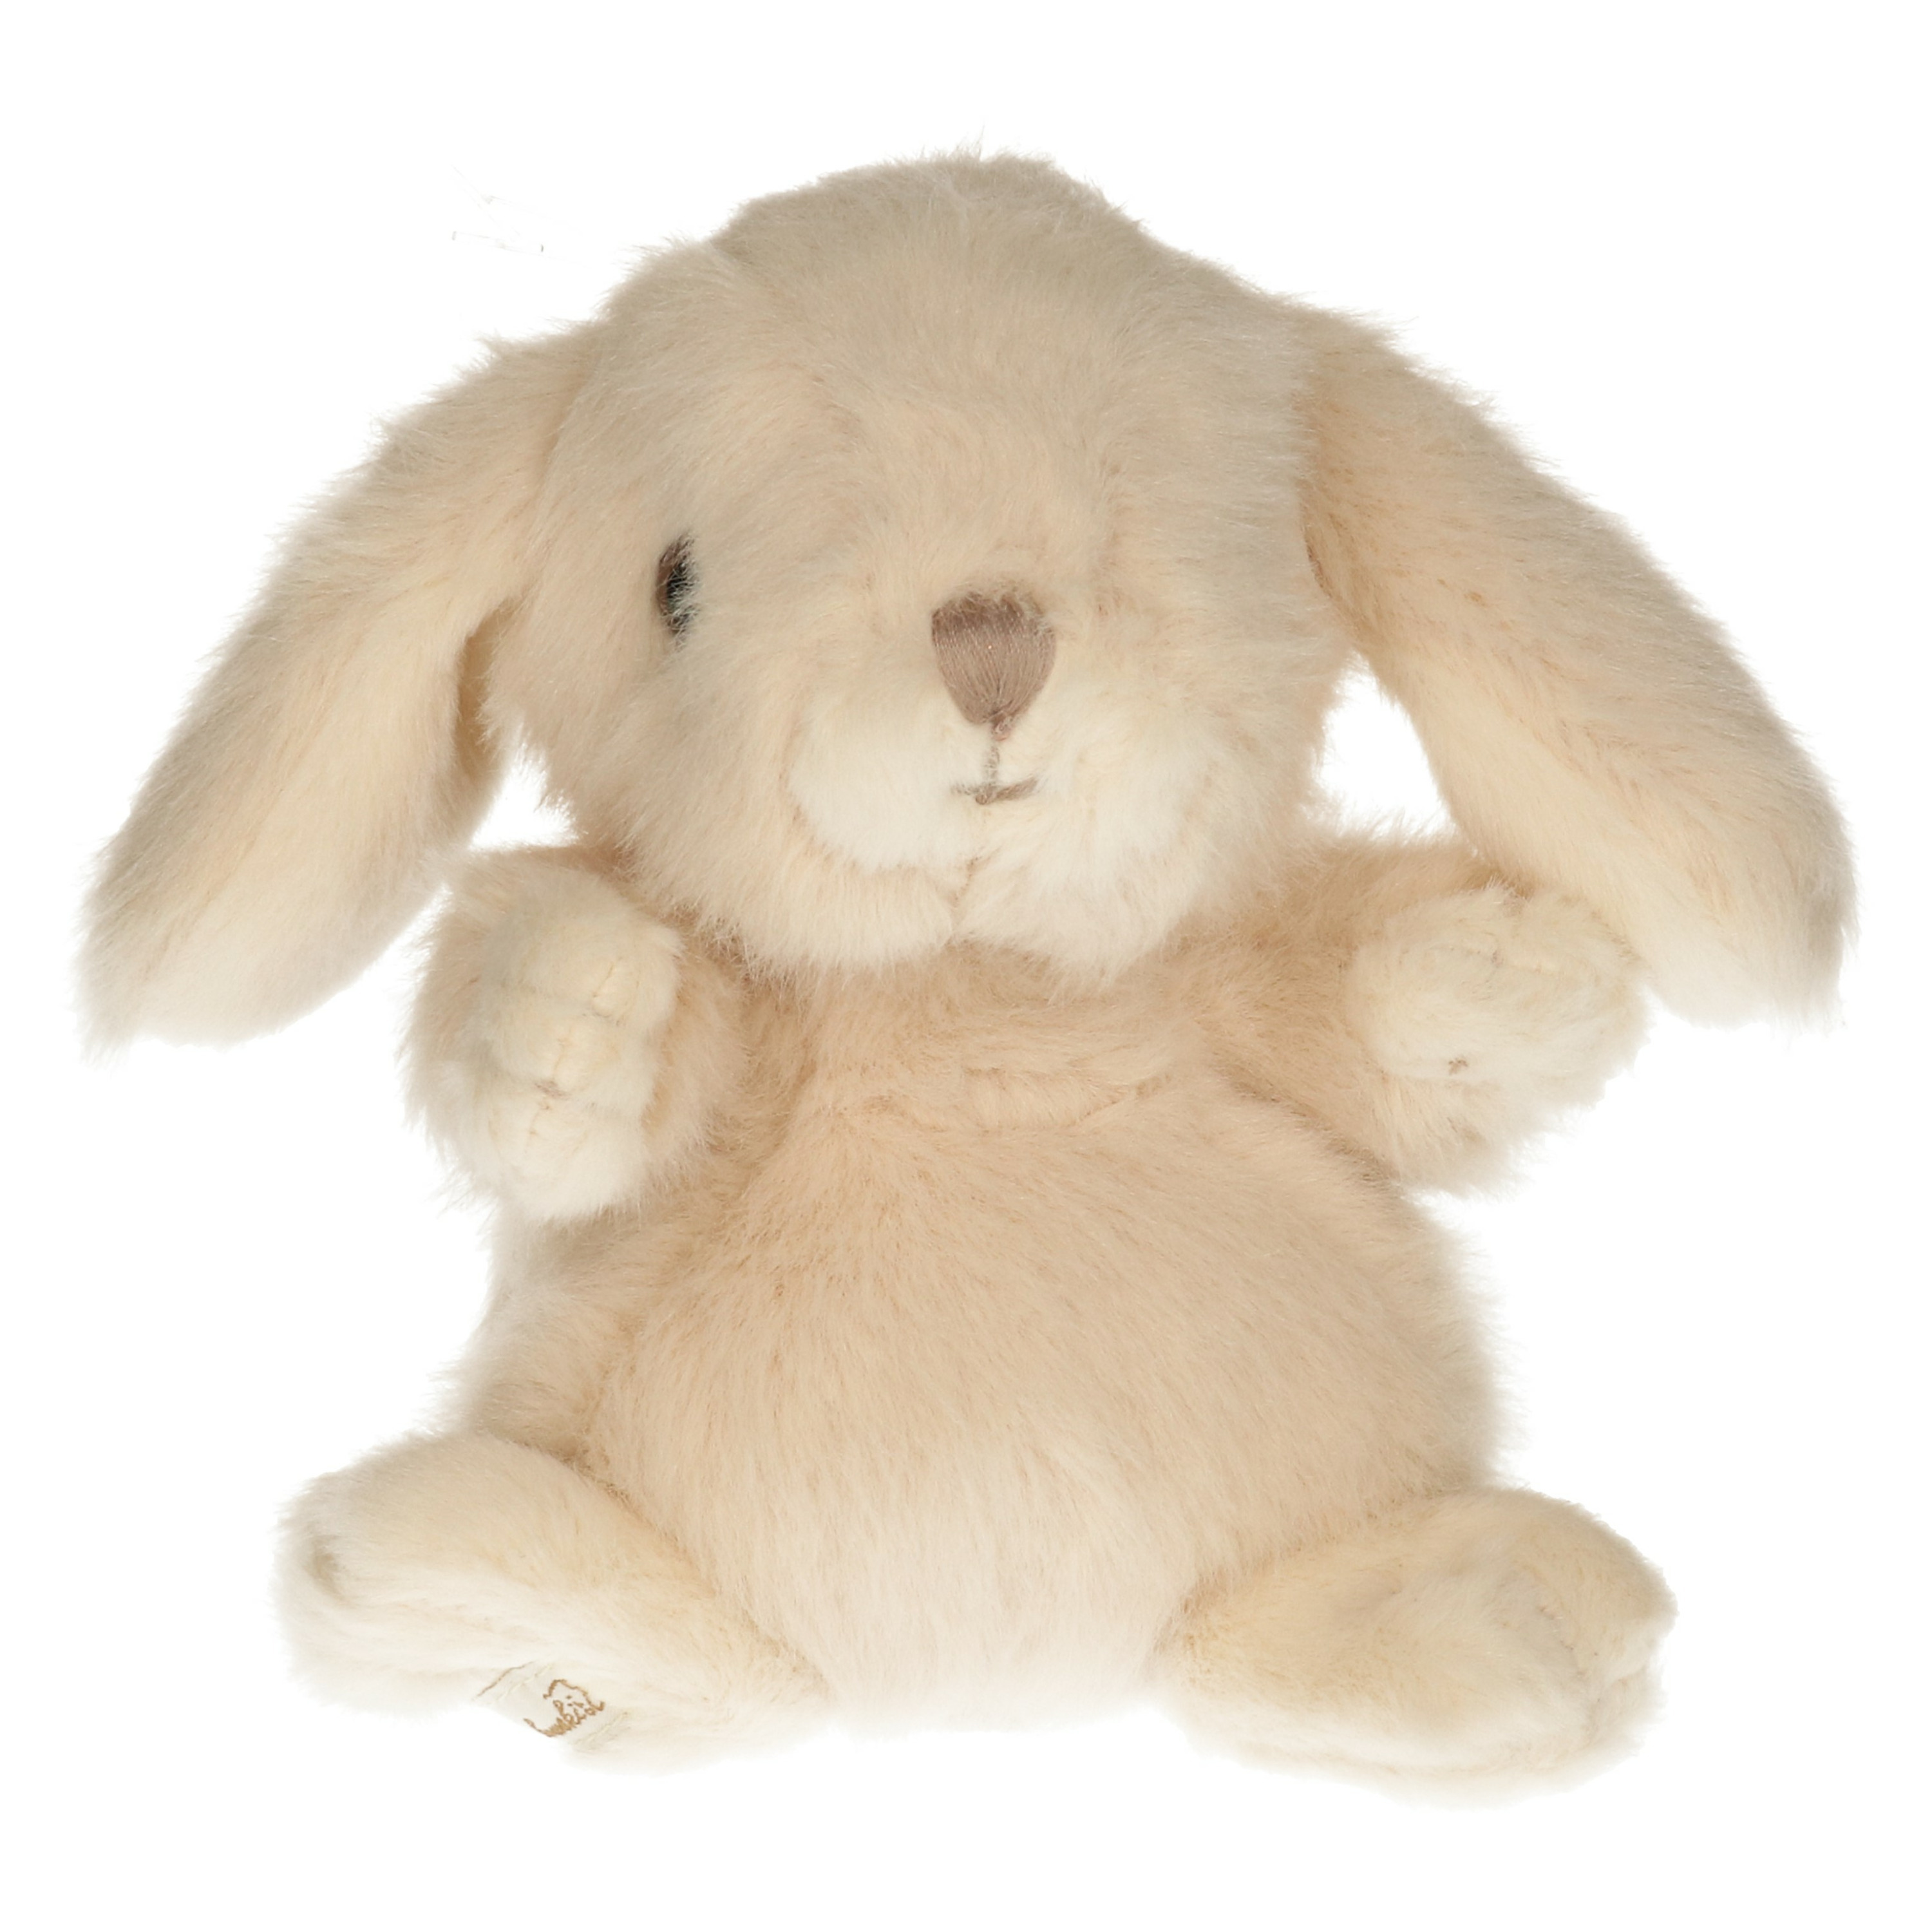 Bukowski pluche konijn knuffeldier - creme wit - zittend - 15 cm - luxe knuffels -